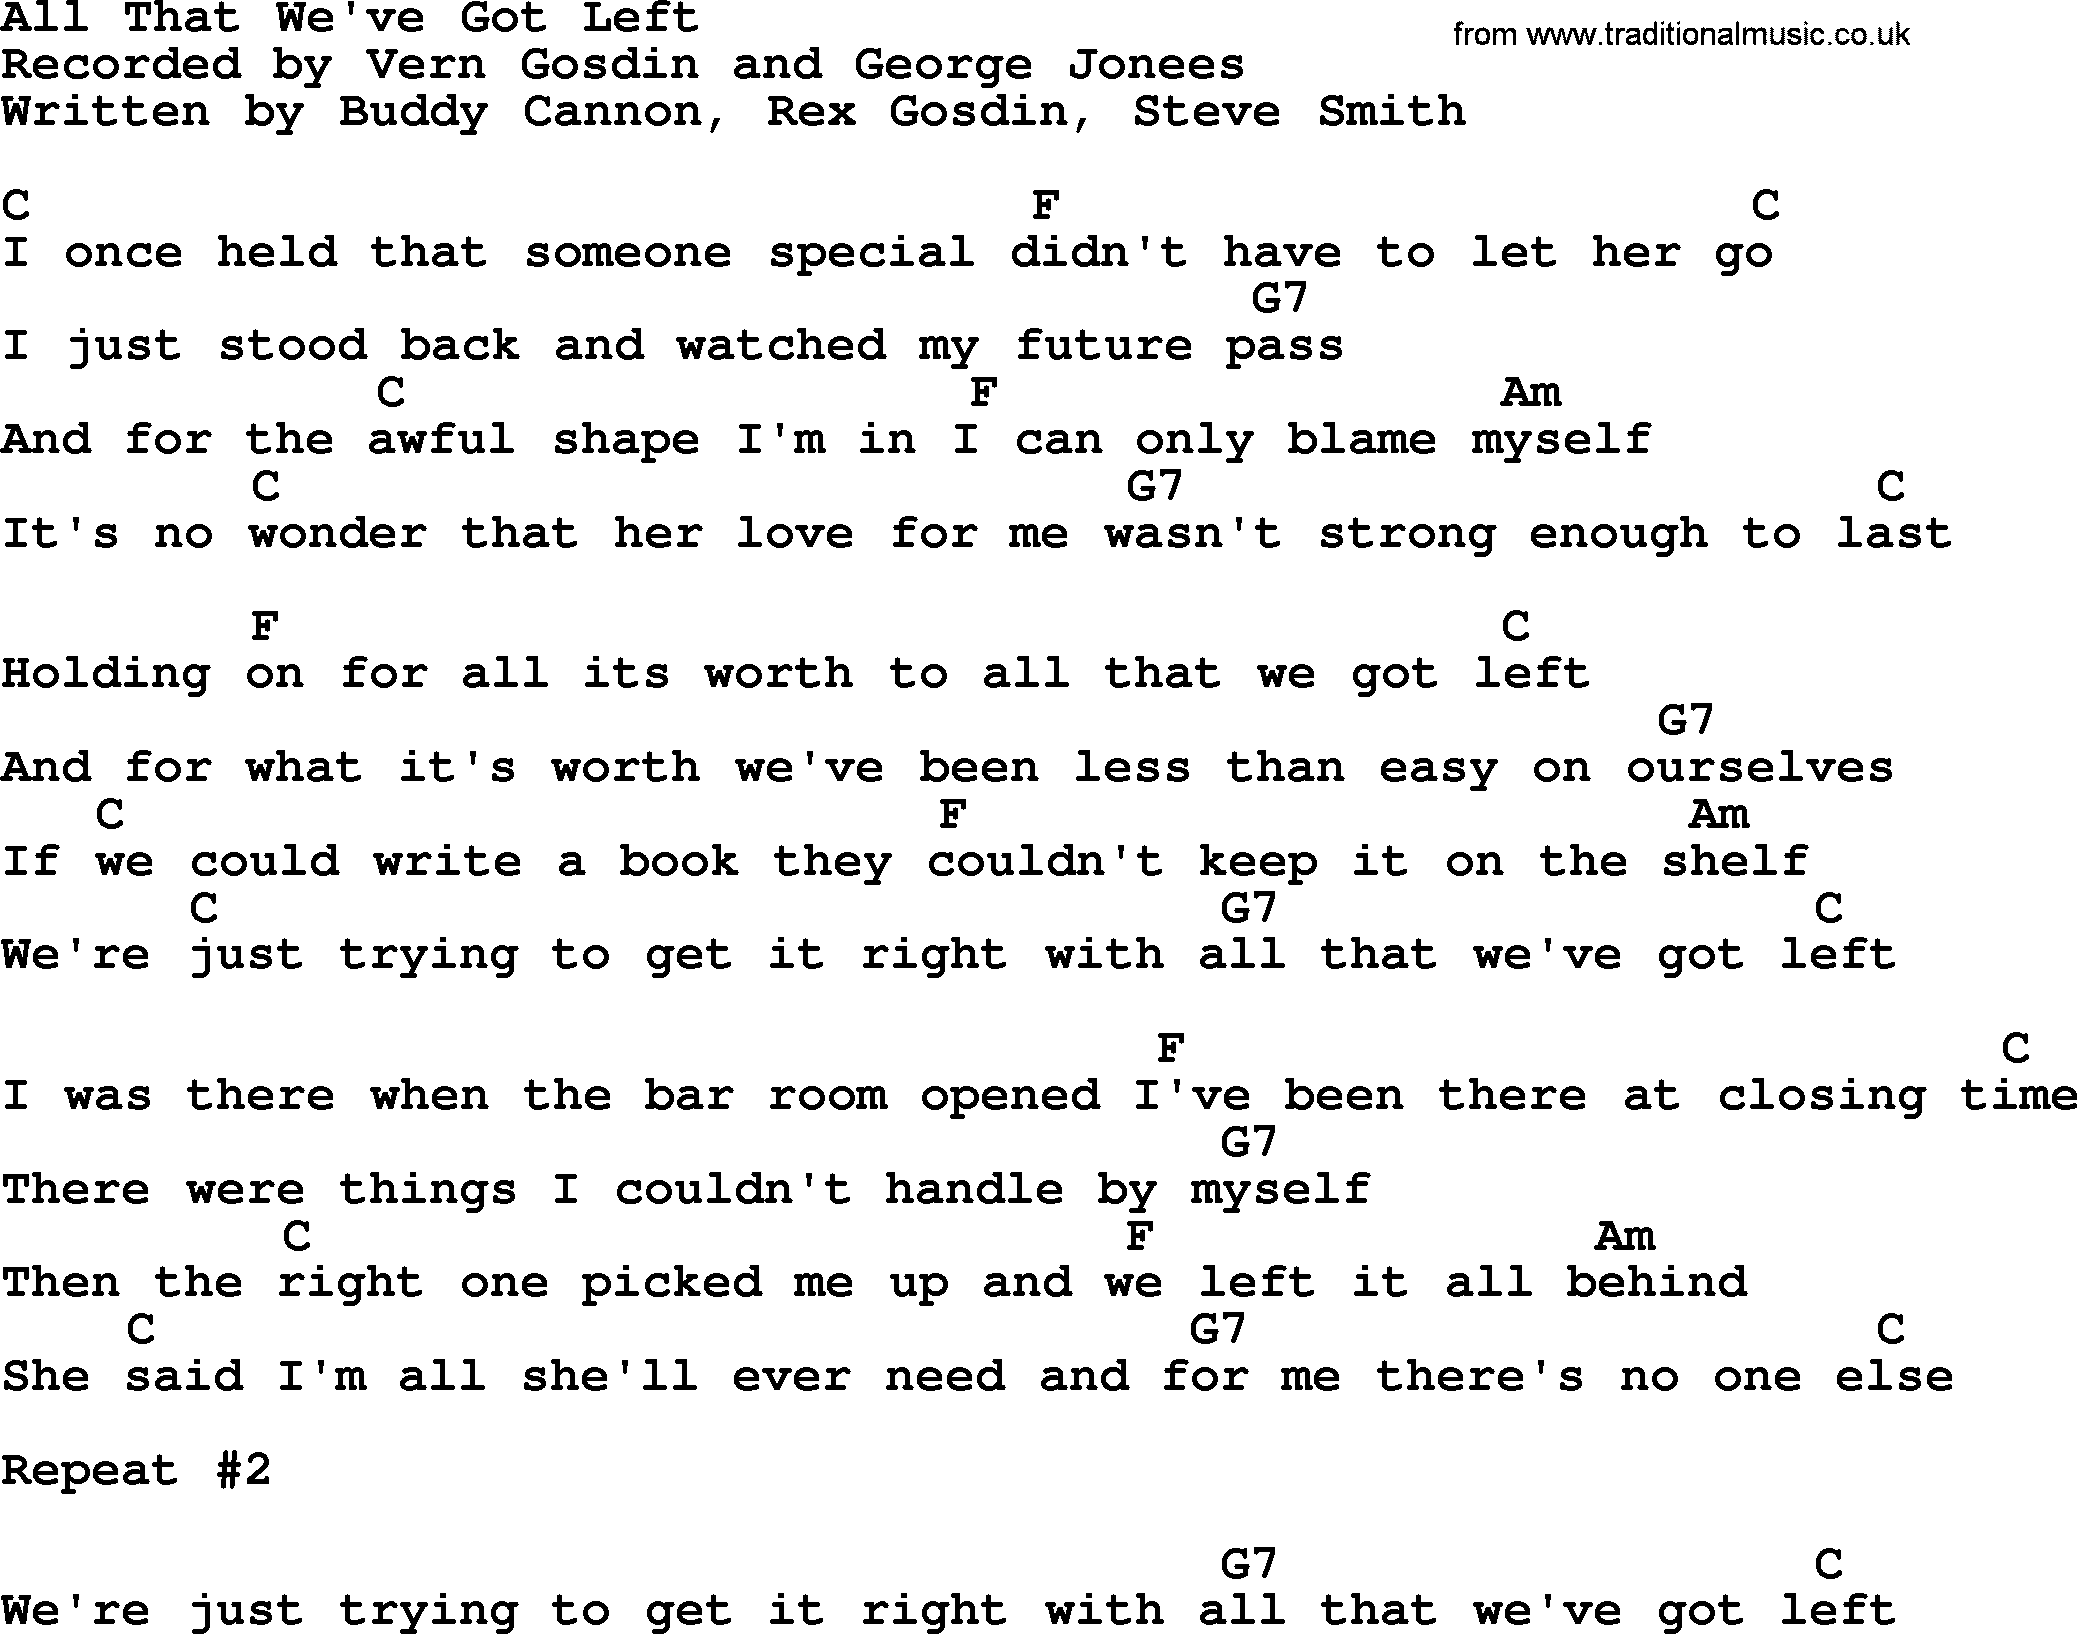 George Jones song: All That We've Got Left, lyrics and chords